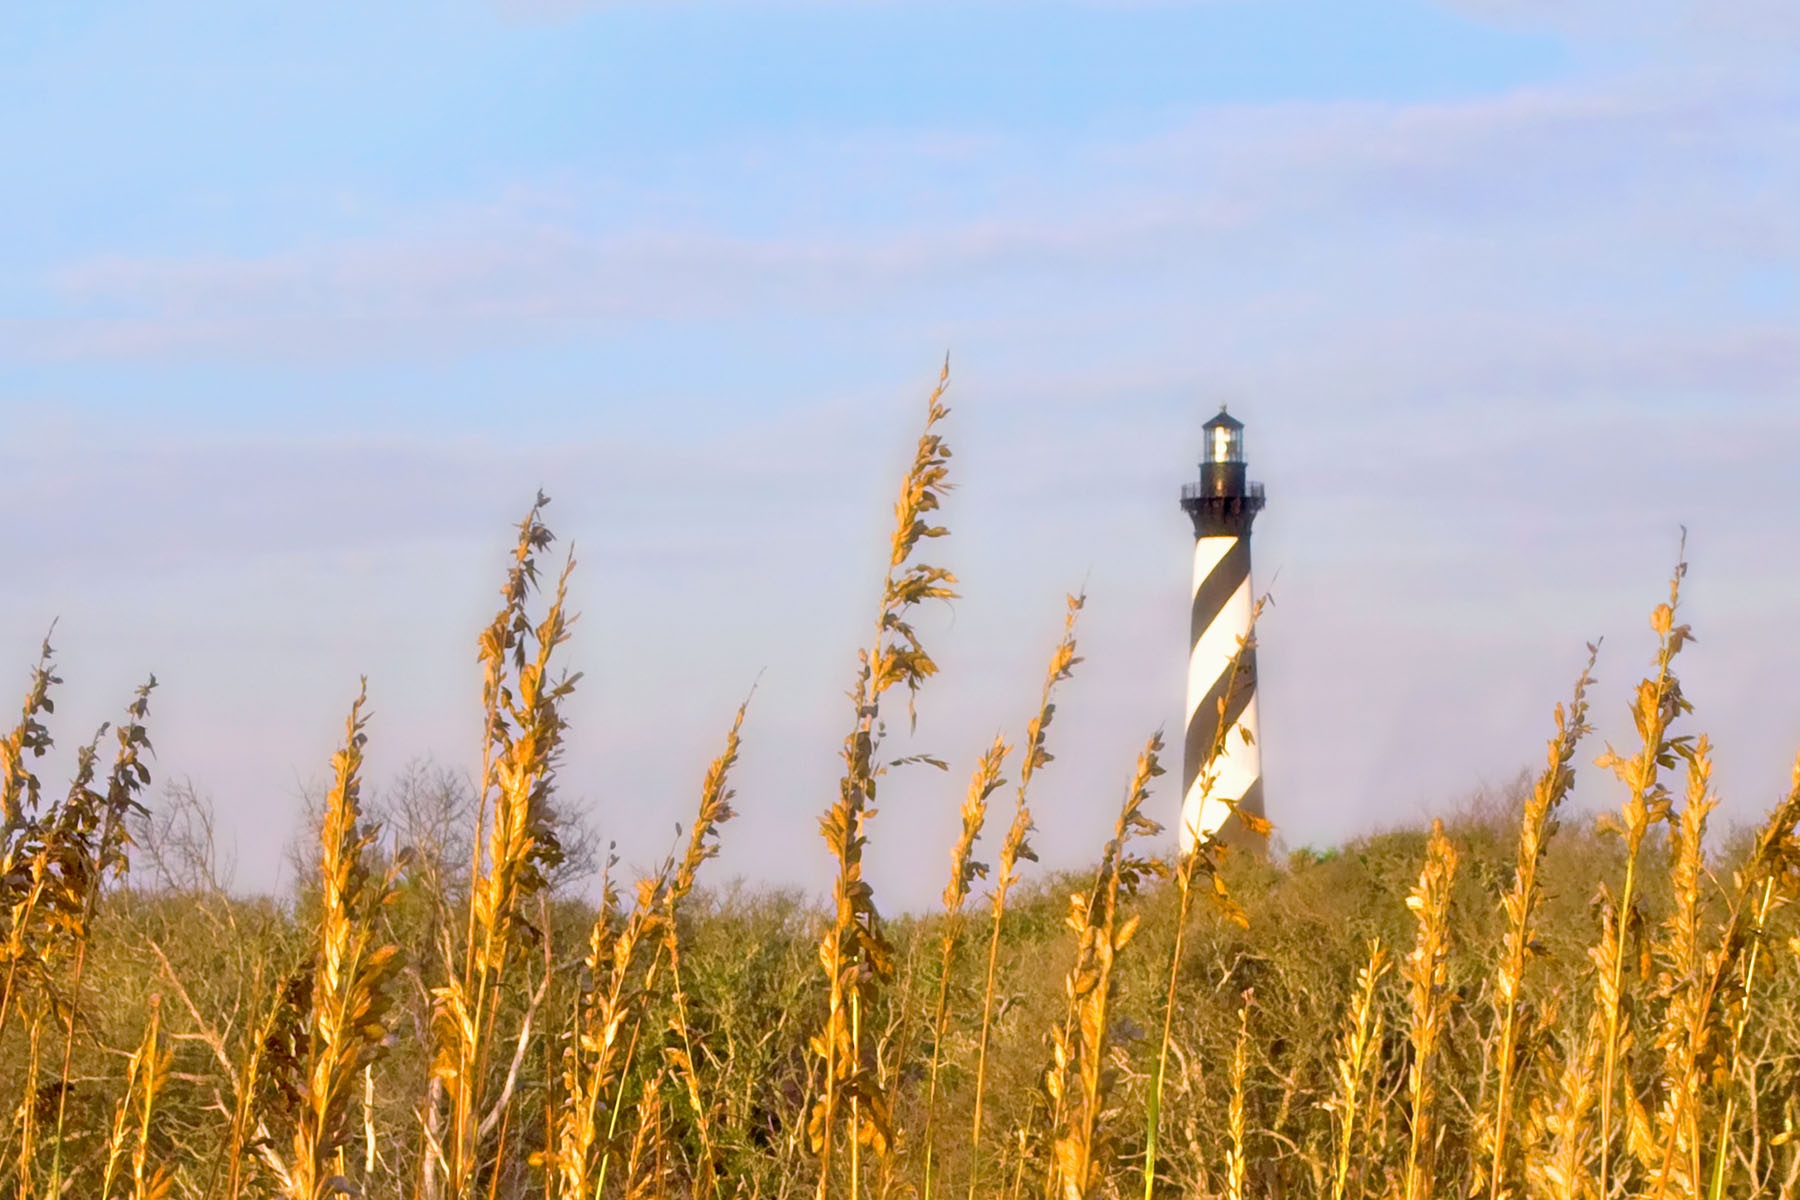 WILD OATS - Sea oats, nice sky, and a lighthouse. Just aim and shoot.